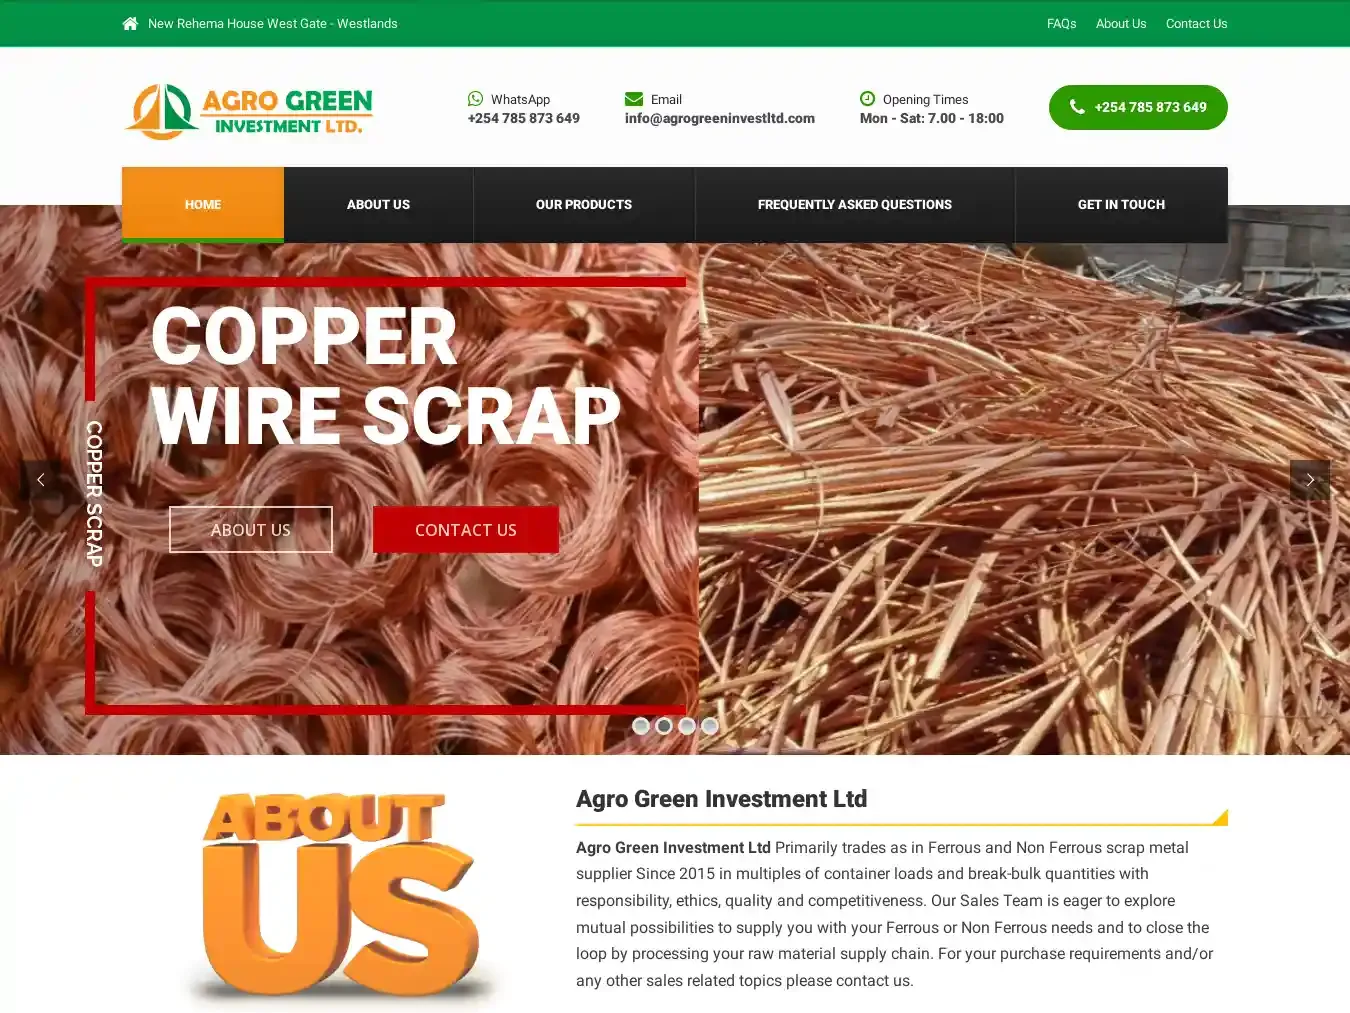 Agrogreeninvestltd.com Fraudulent Commodity website.